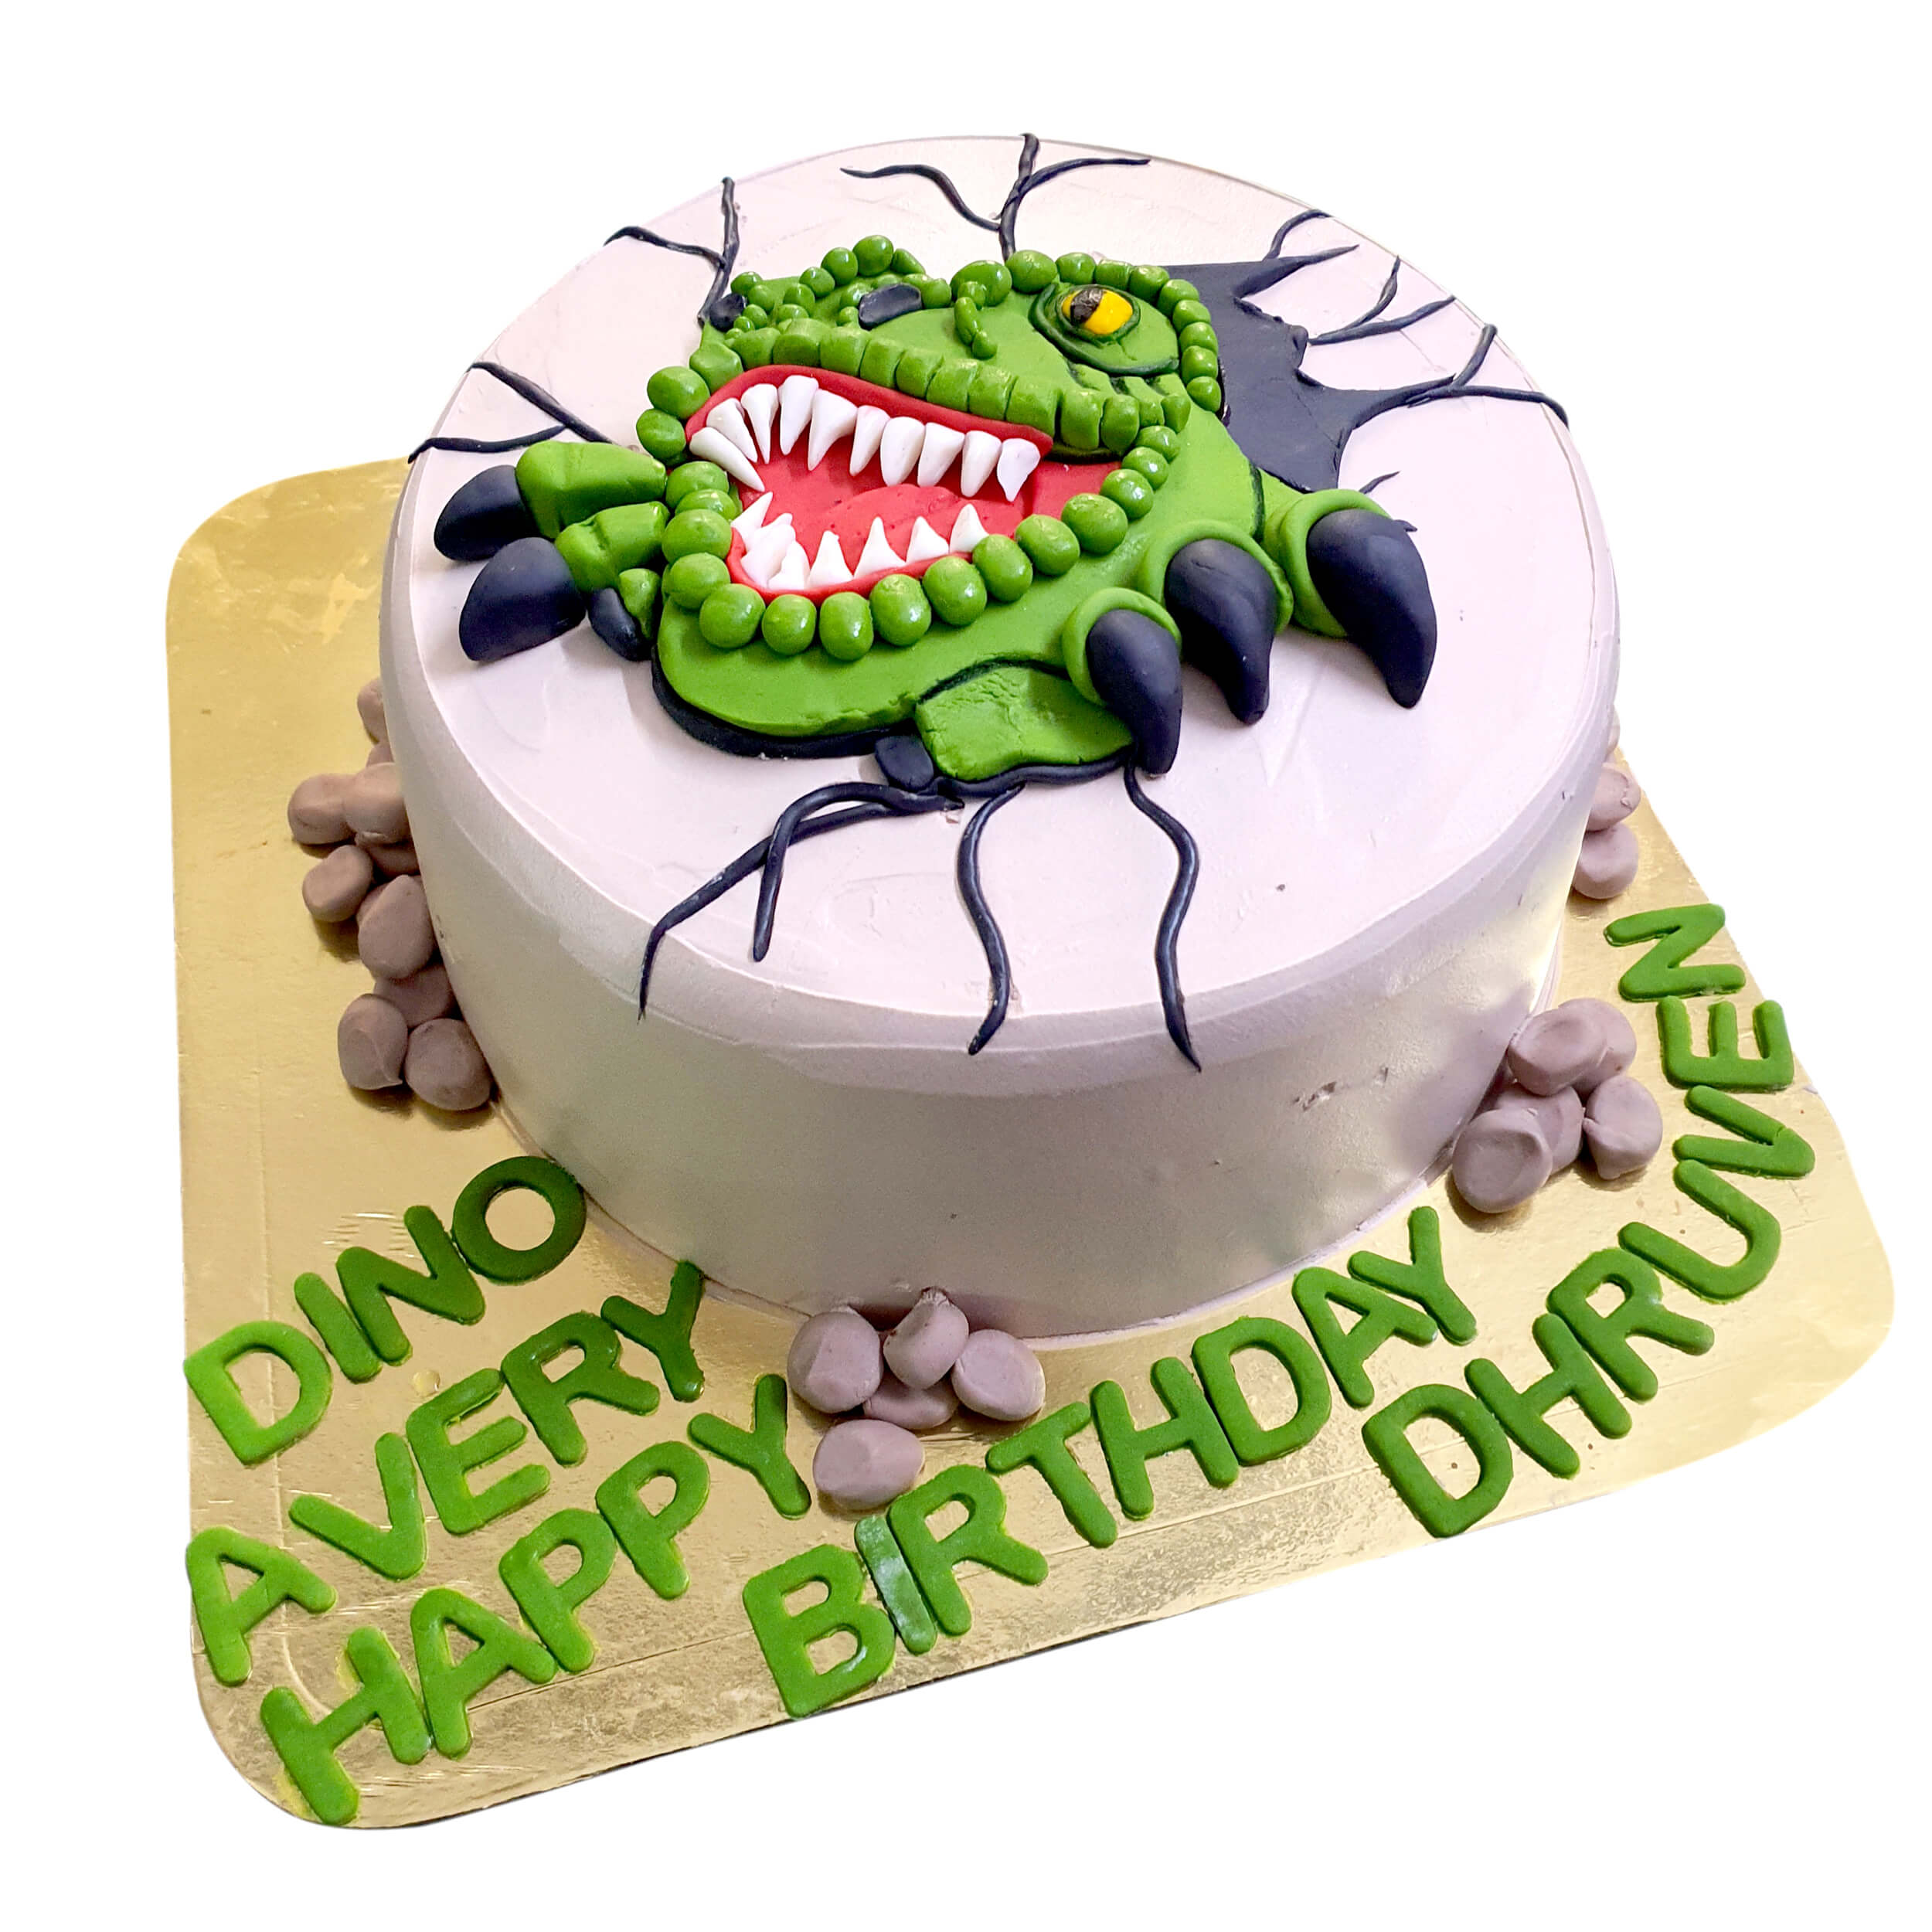 Dinosaur | Dinosaur cake, 3rd birthday cakes, Cream frosting